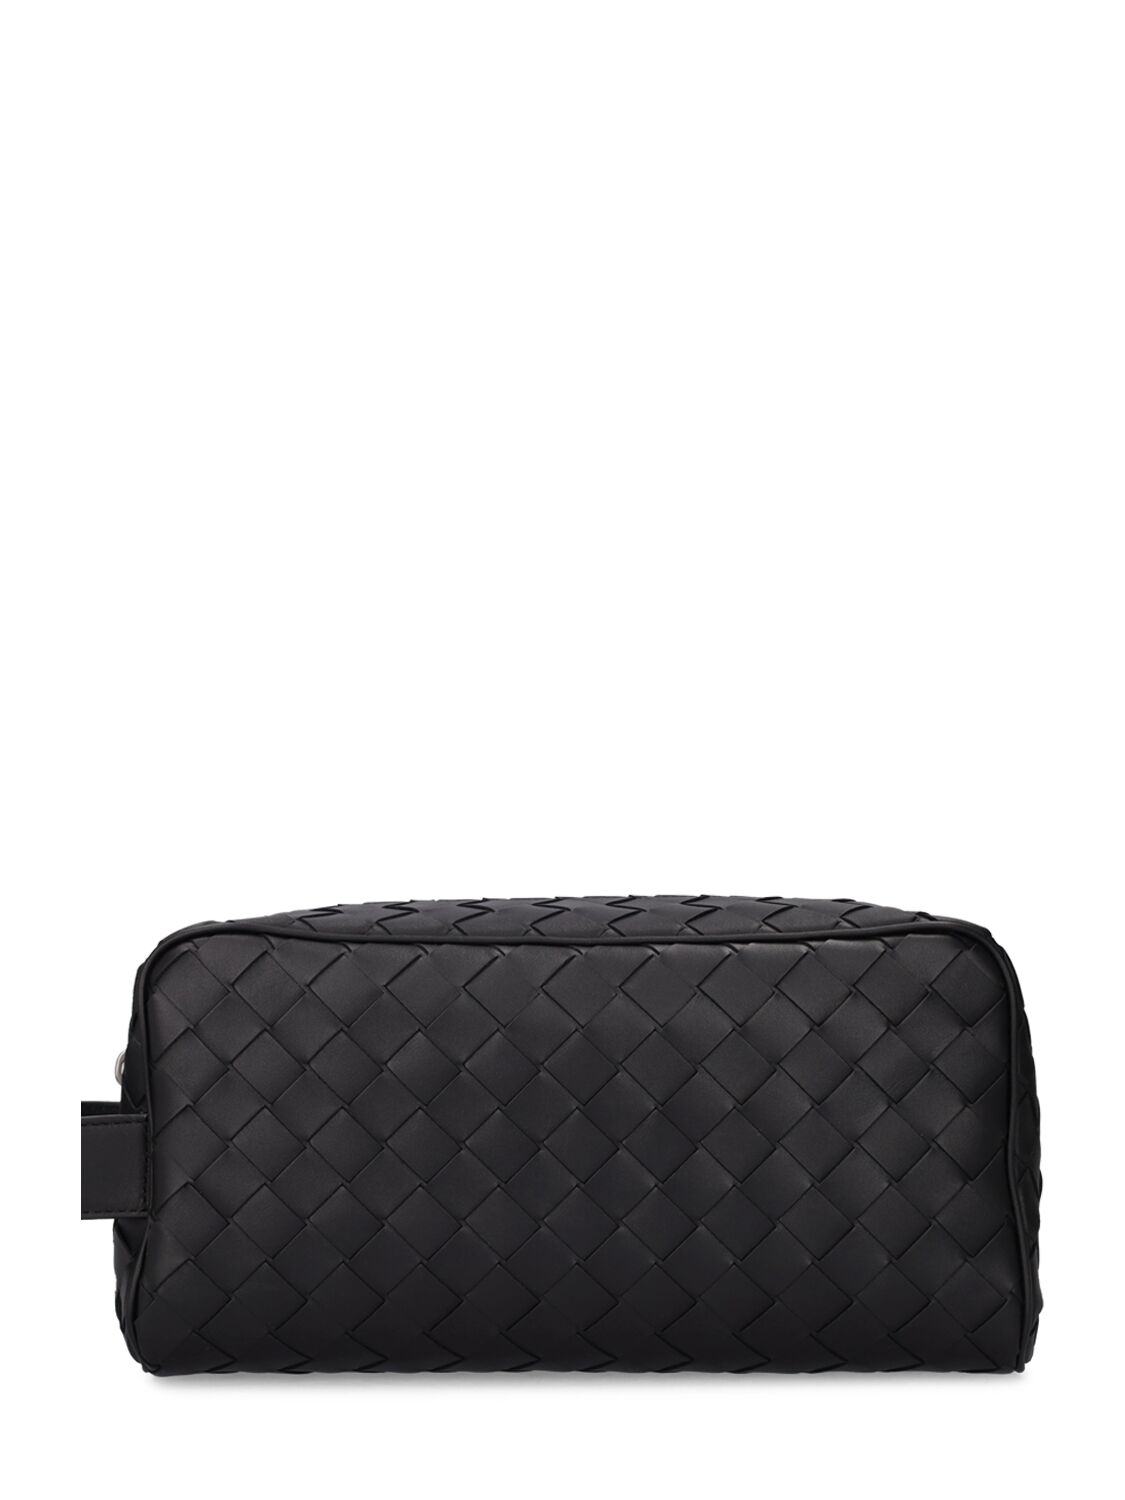 Bottega Veneta Intrecciato Travel Leather Pouch In Black